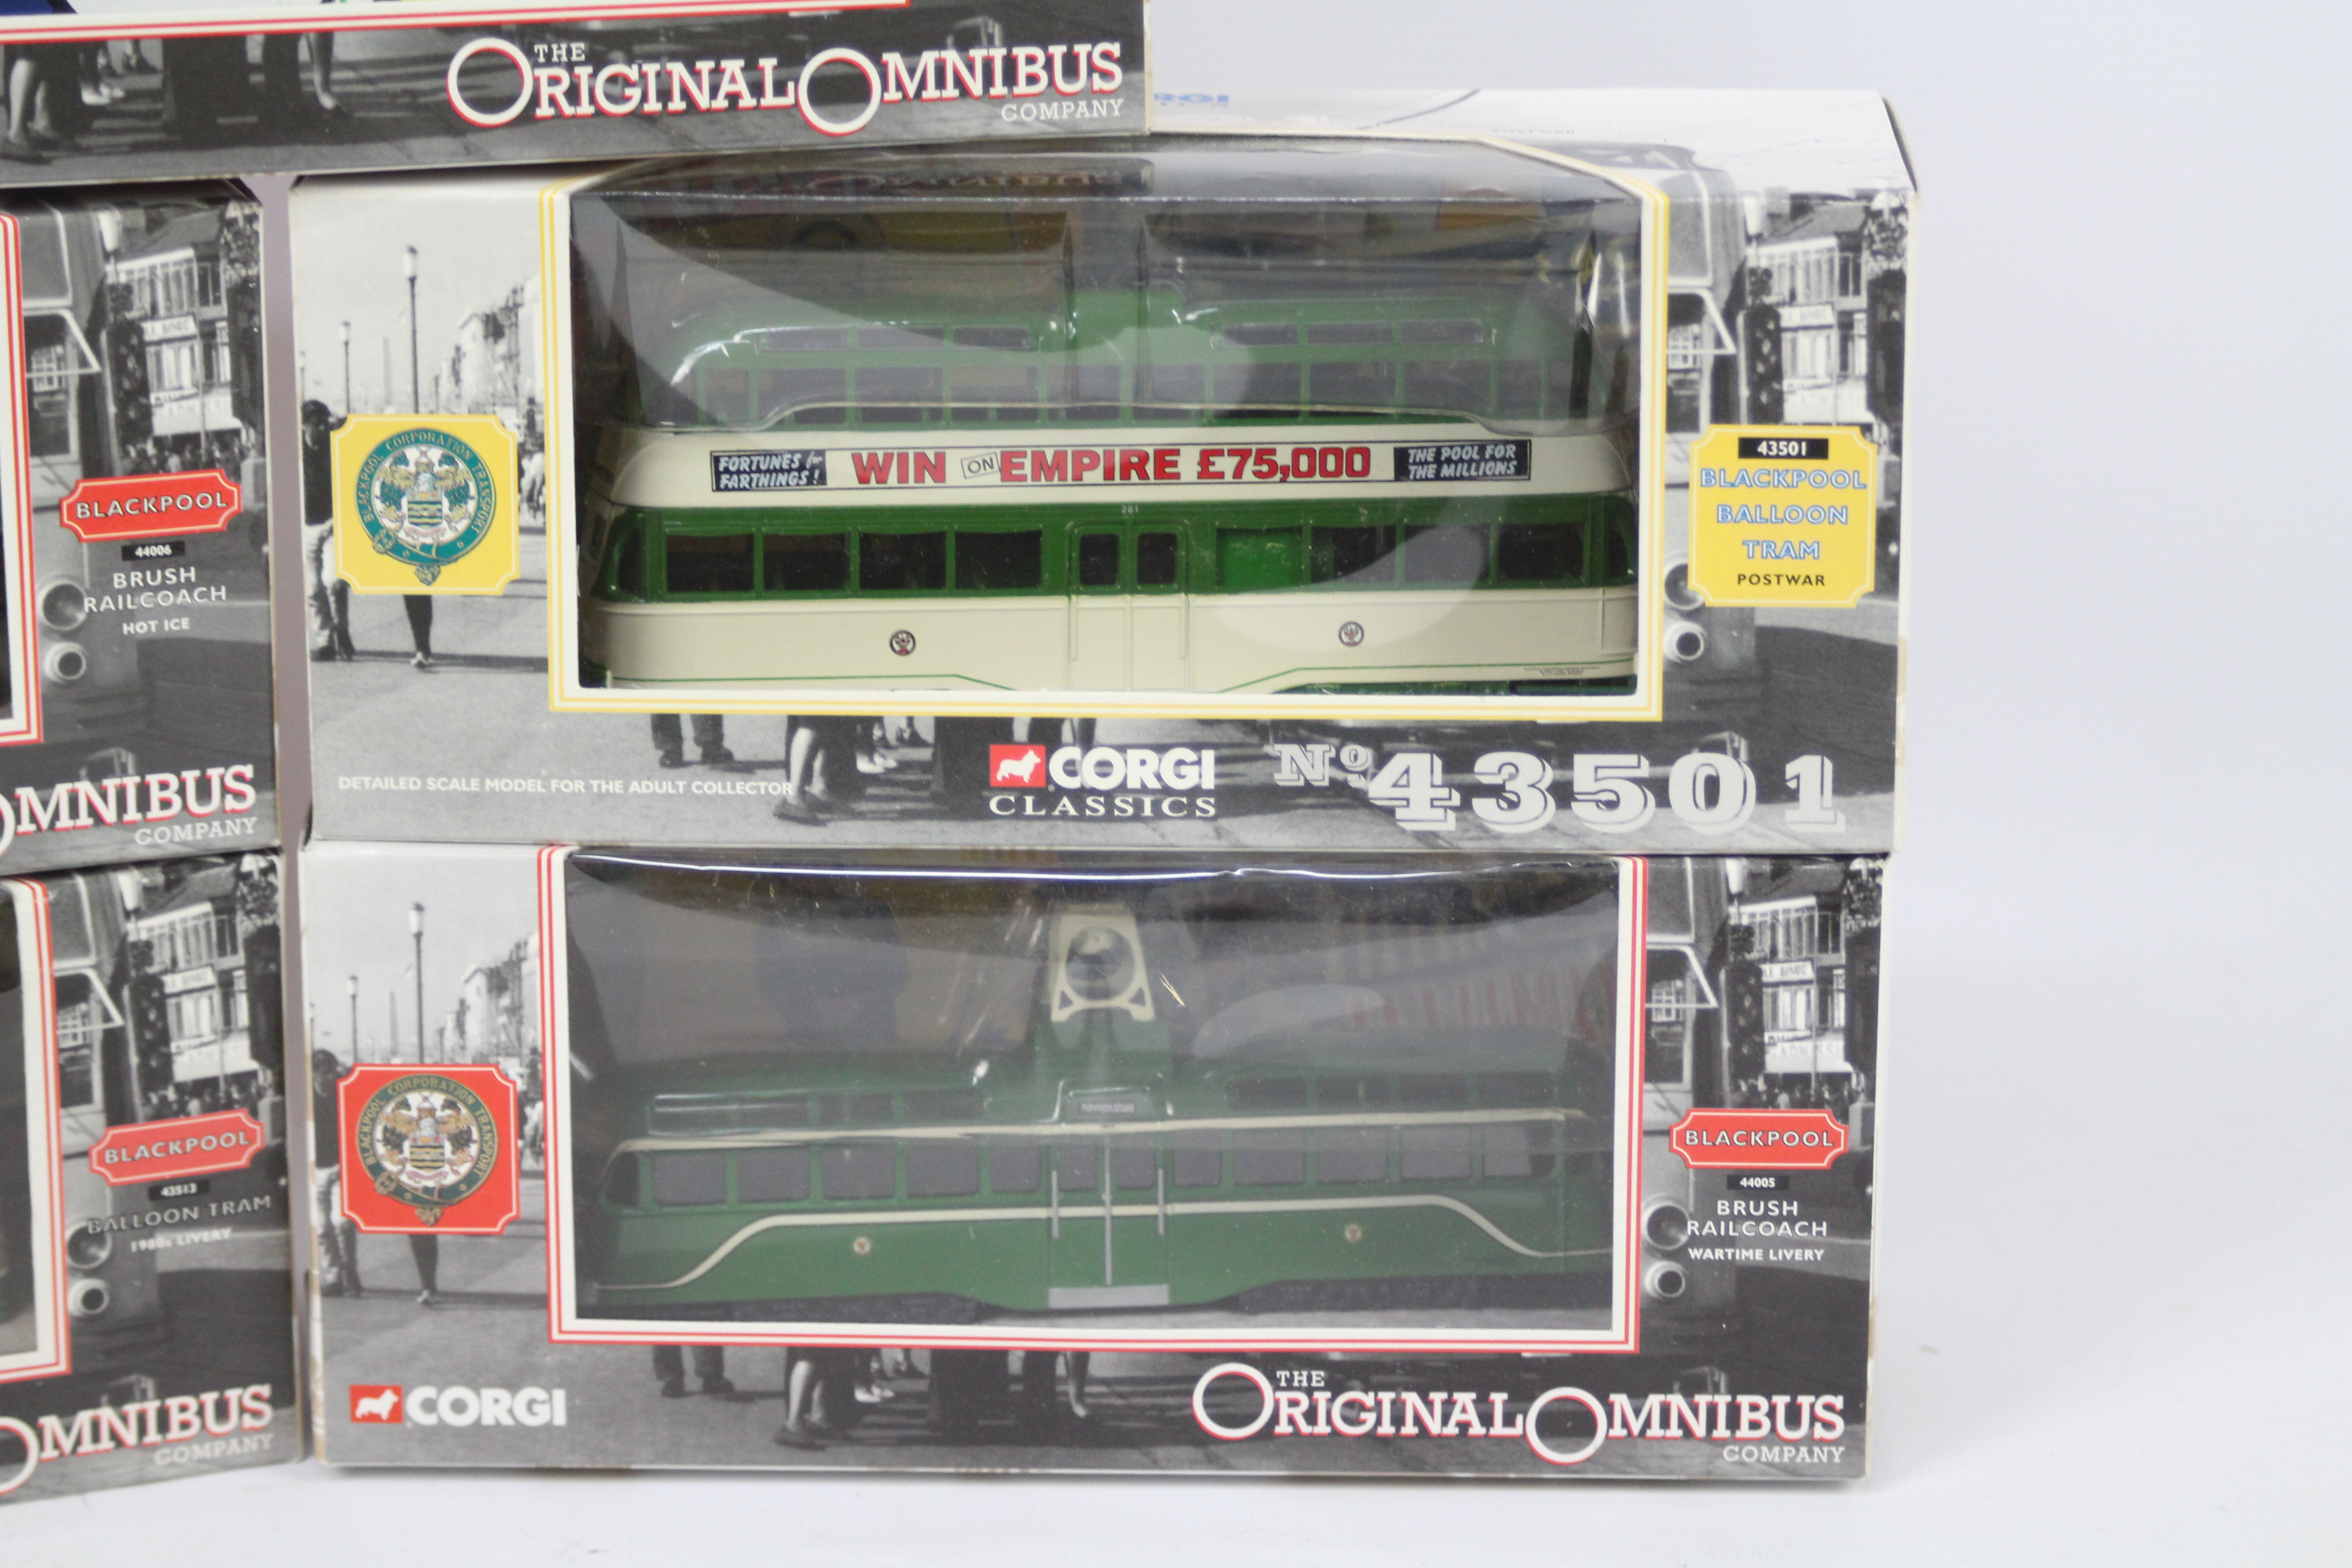 Corgi Original Omnibus - Five boxed diecast model Blackpool trams from Corgi OO. - Image 3 of 3